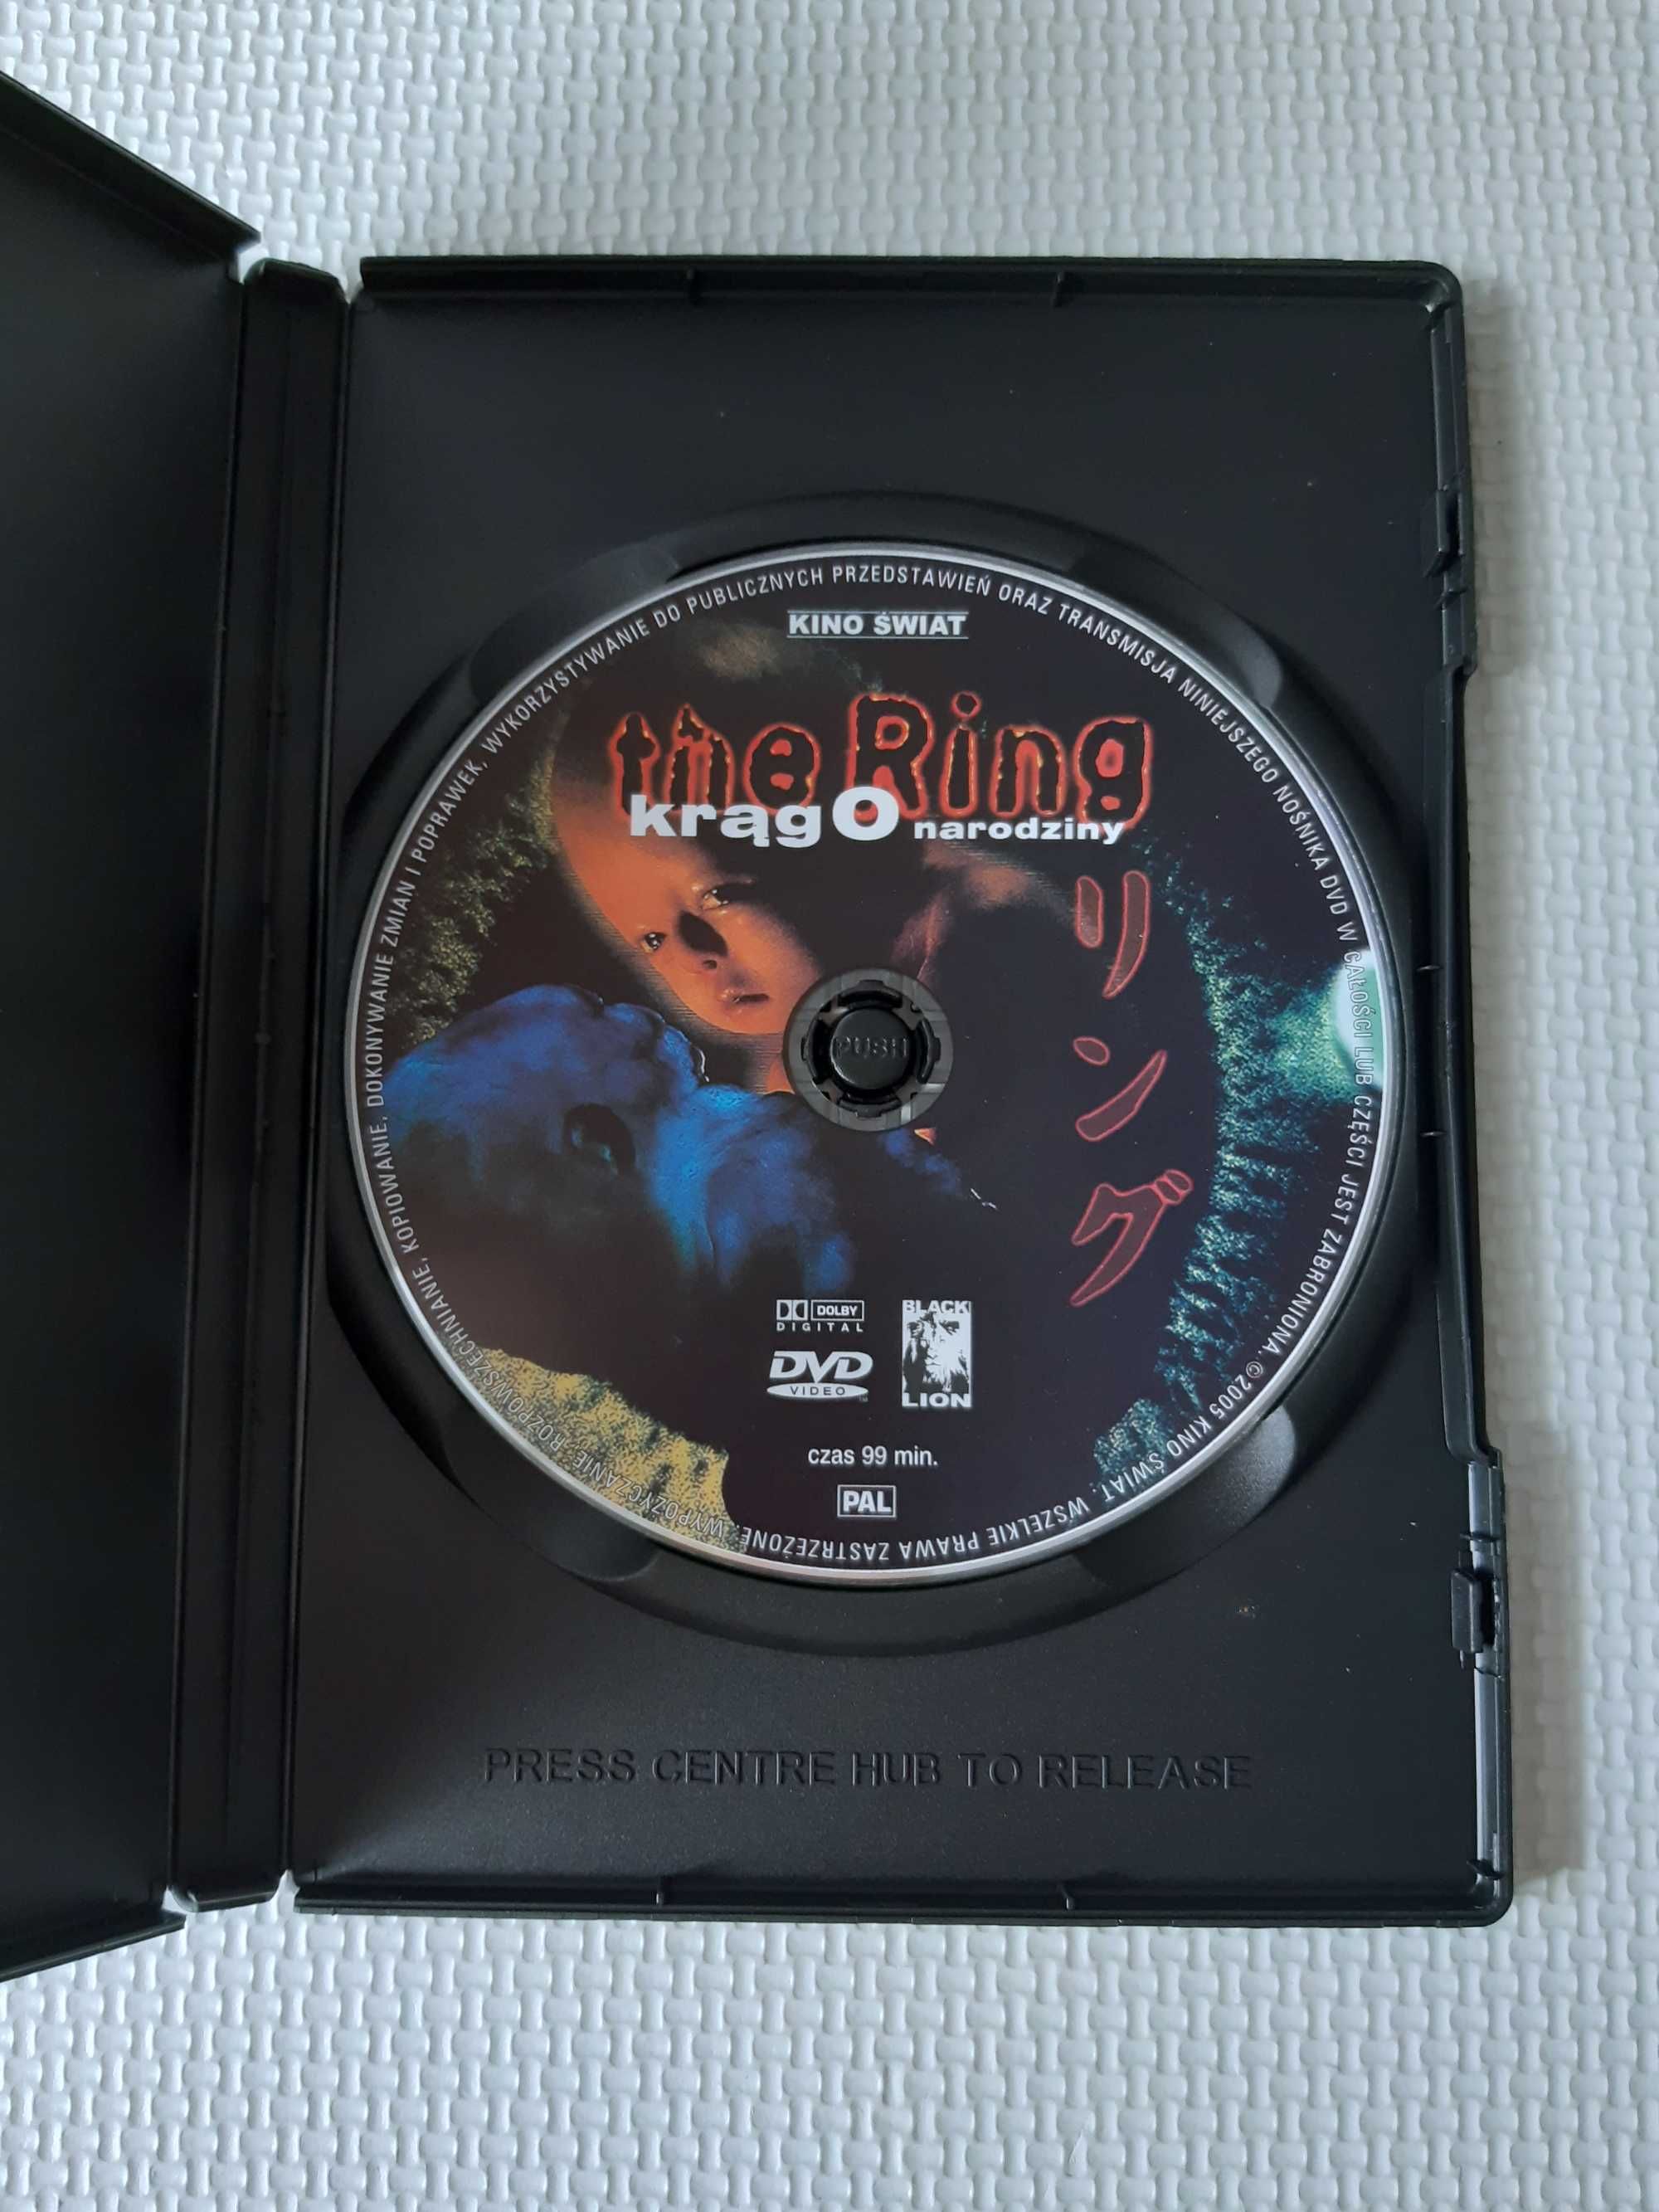 The Ring - Krąg 0. Narodziny Płyta DVD Horror Japoński